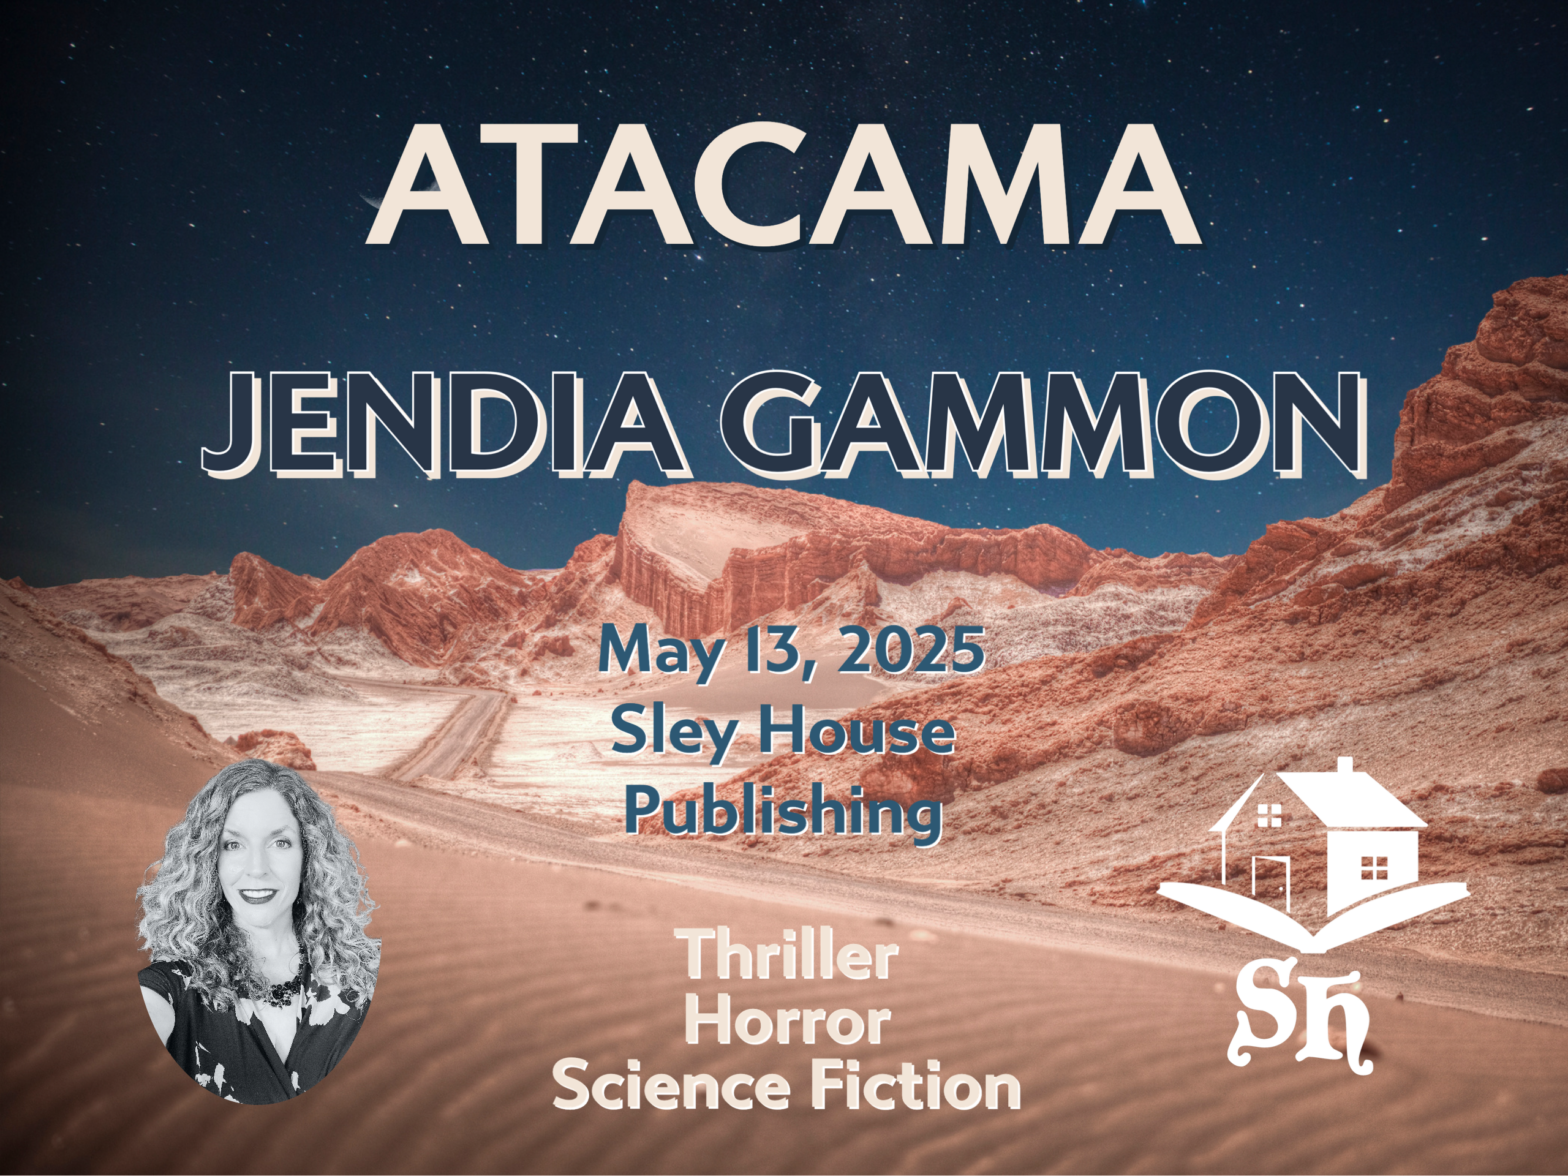 Atacama Jendia Gammon May 13, 2025 Sley House Publishing Picture of Jendia Gammon, Sley House logo, and backdrop of Atacama desert and night sky.